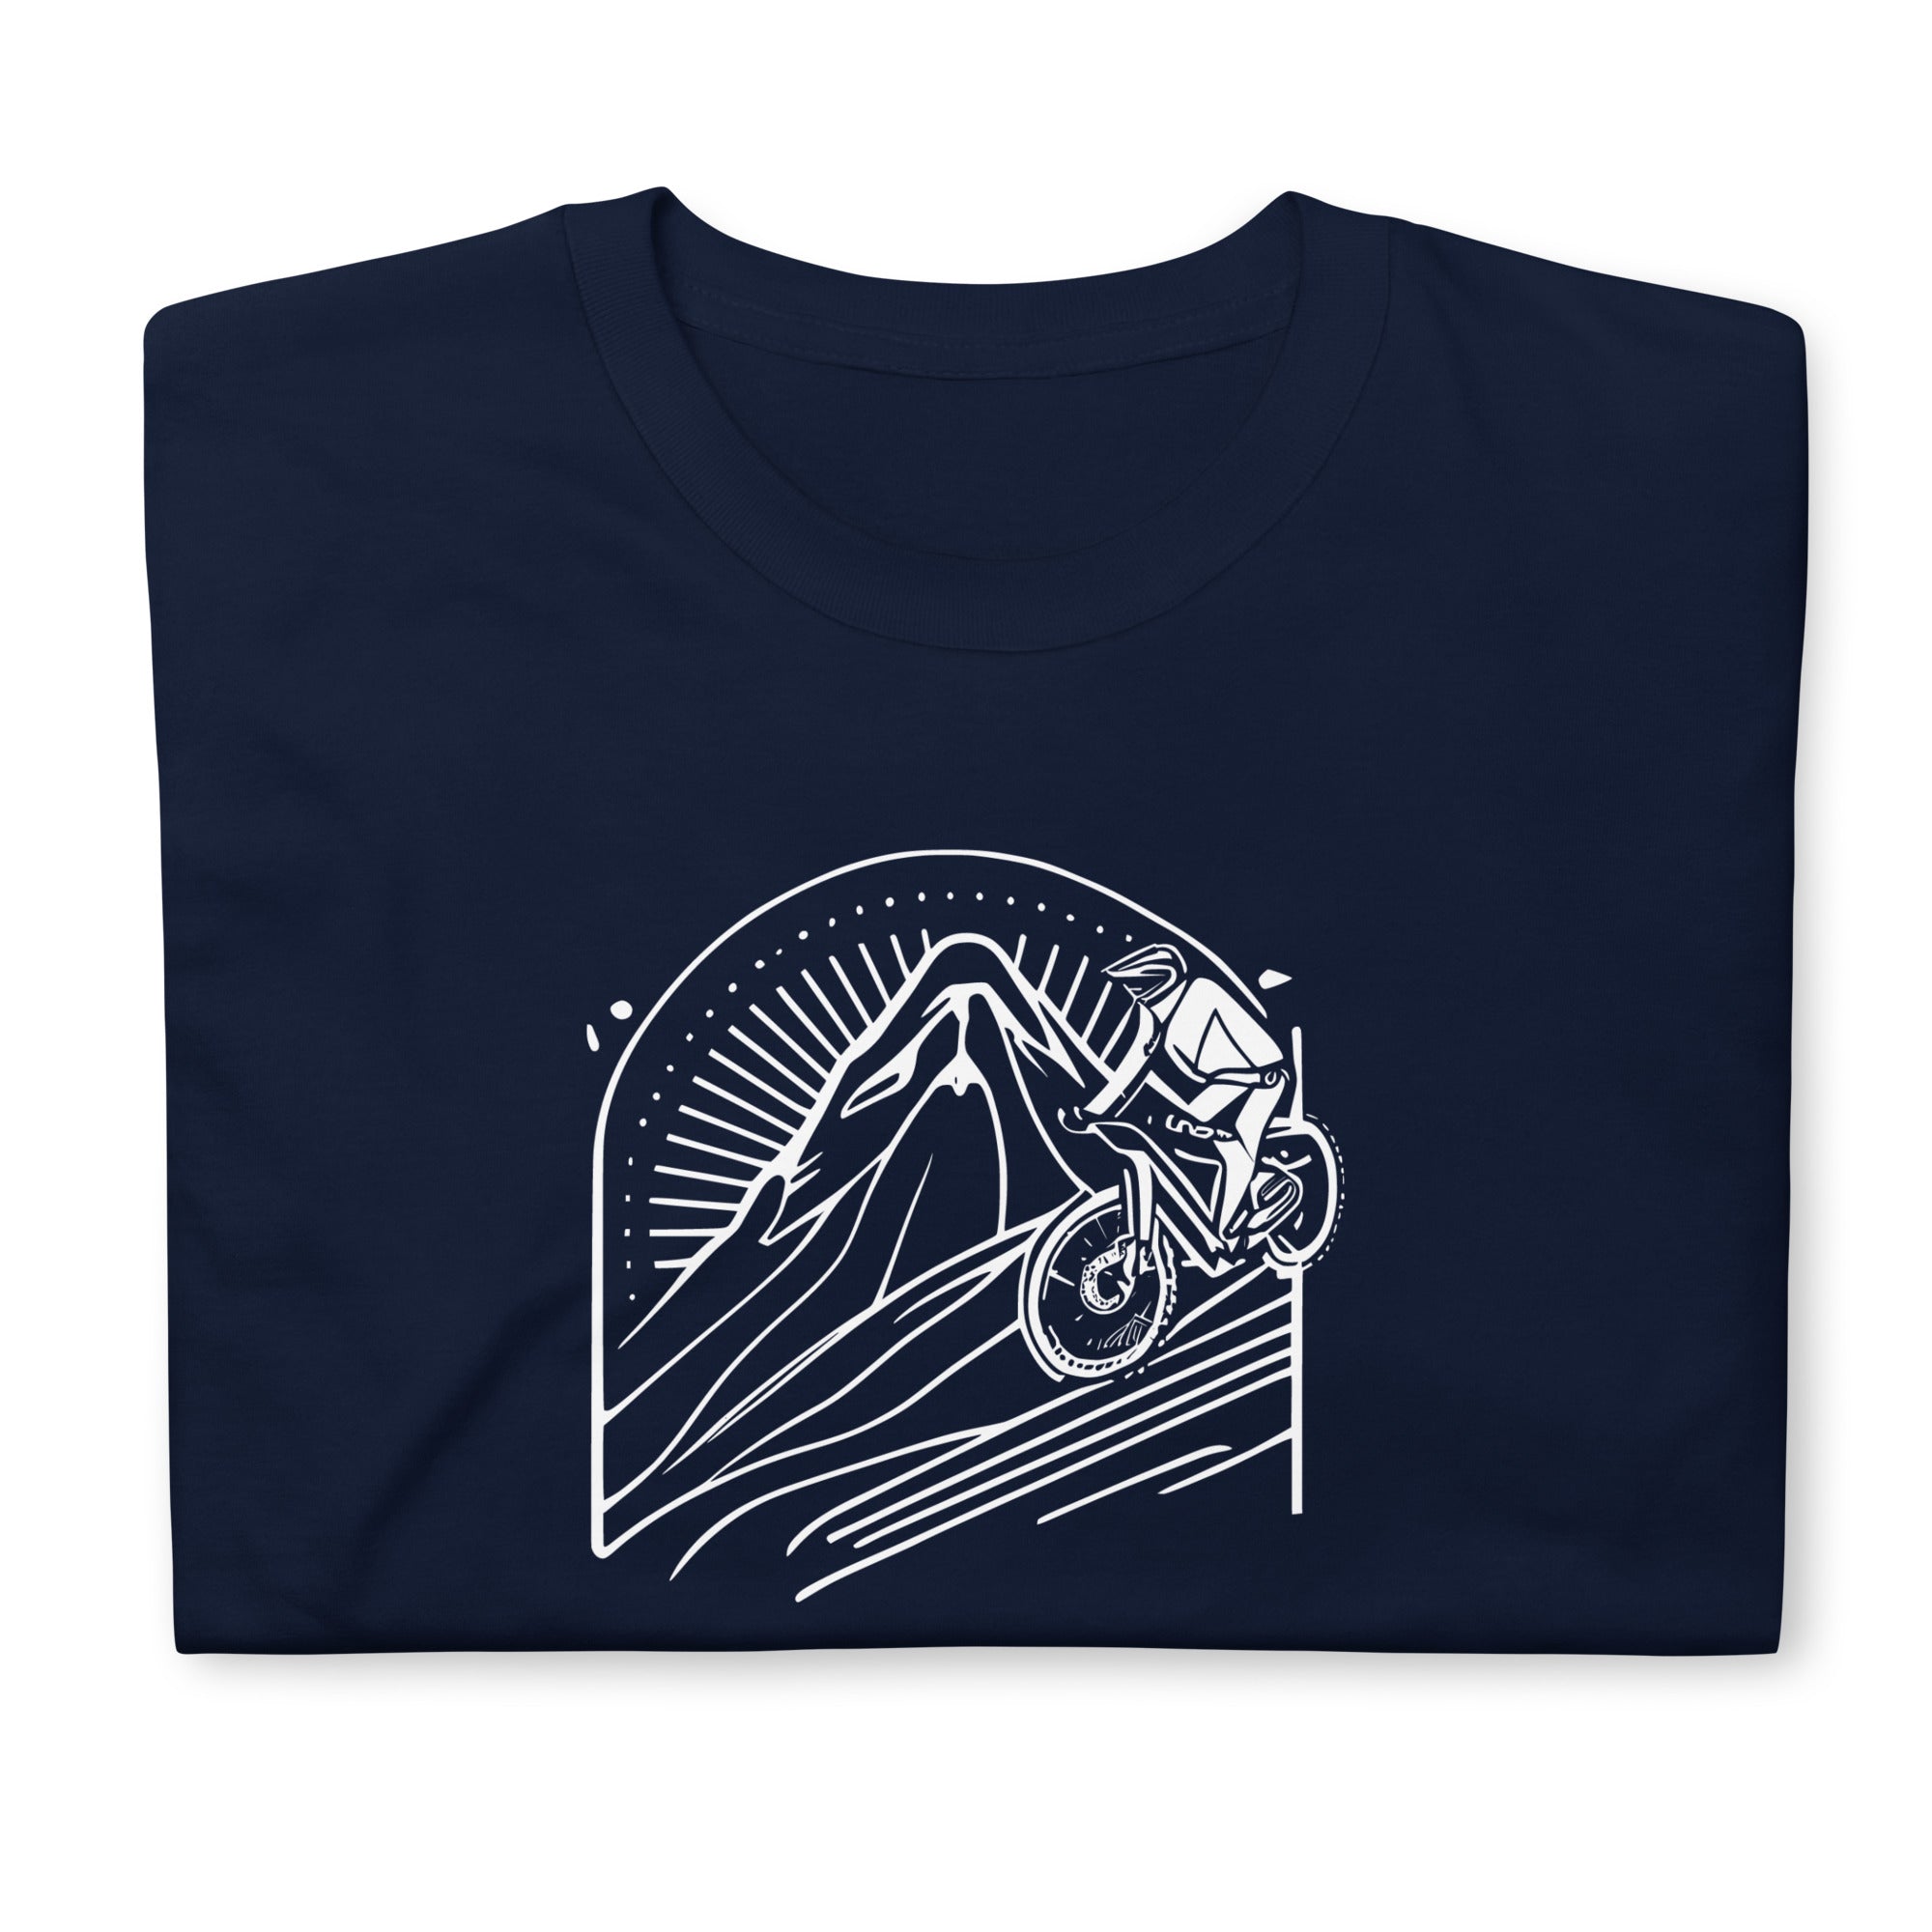 Ride The Trail Men's T-Shirt